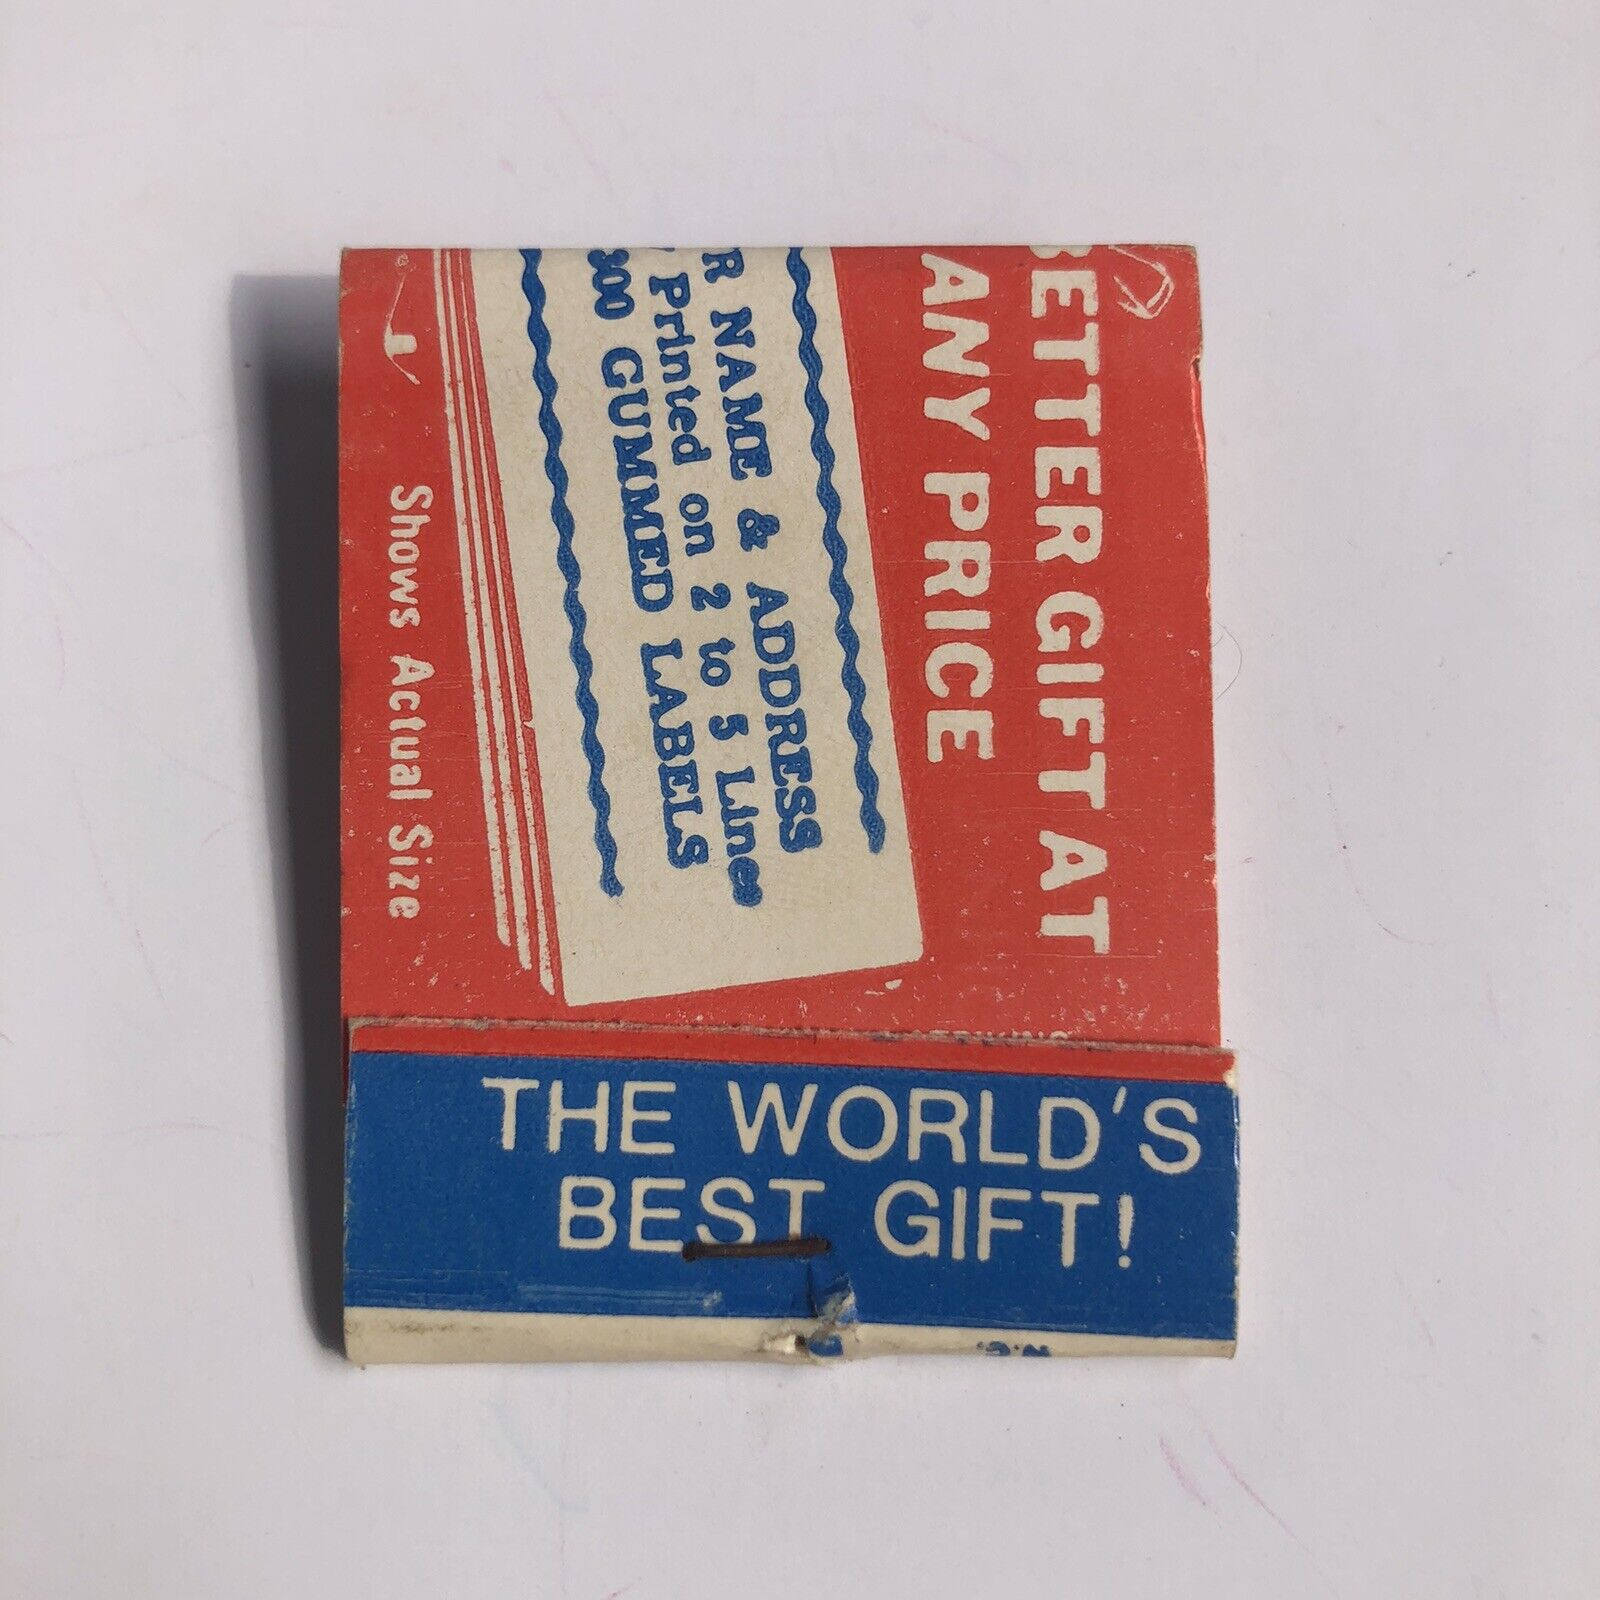 The Worlds Best Gift De Lux Address Labels Vintage Match Book Advertisement